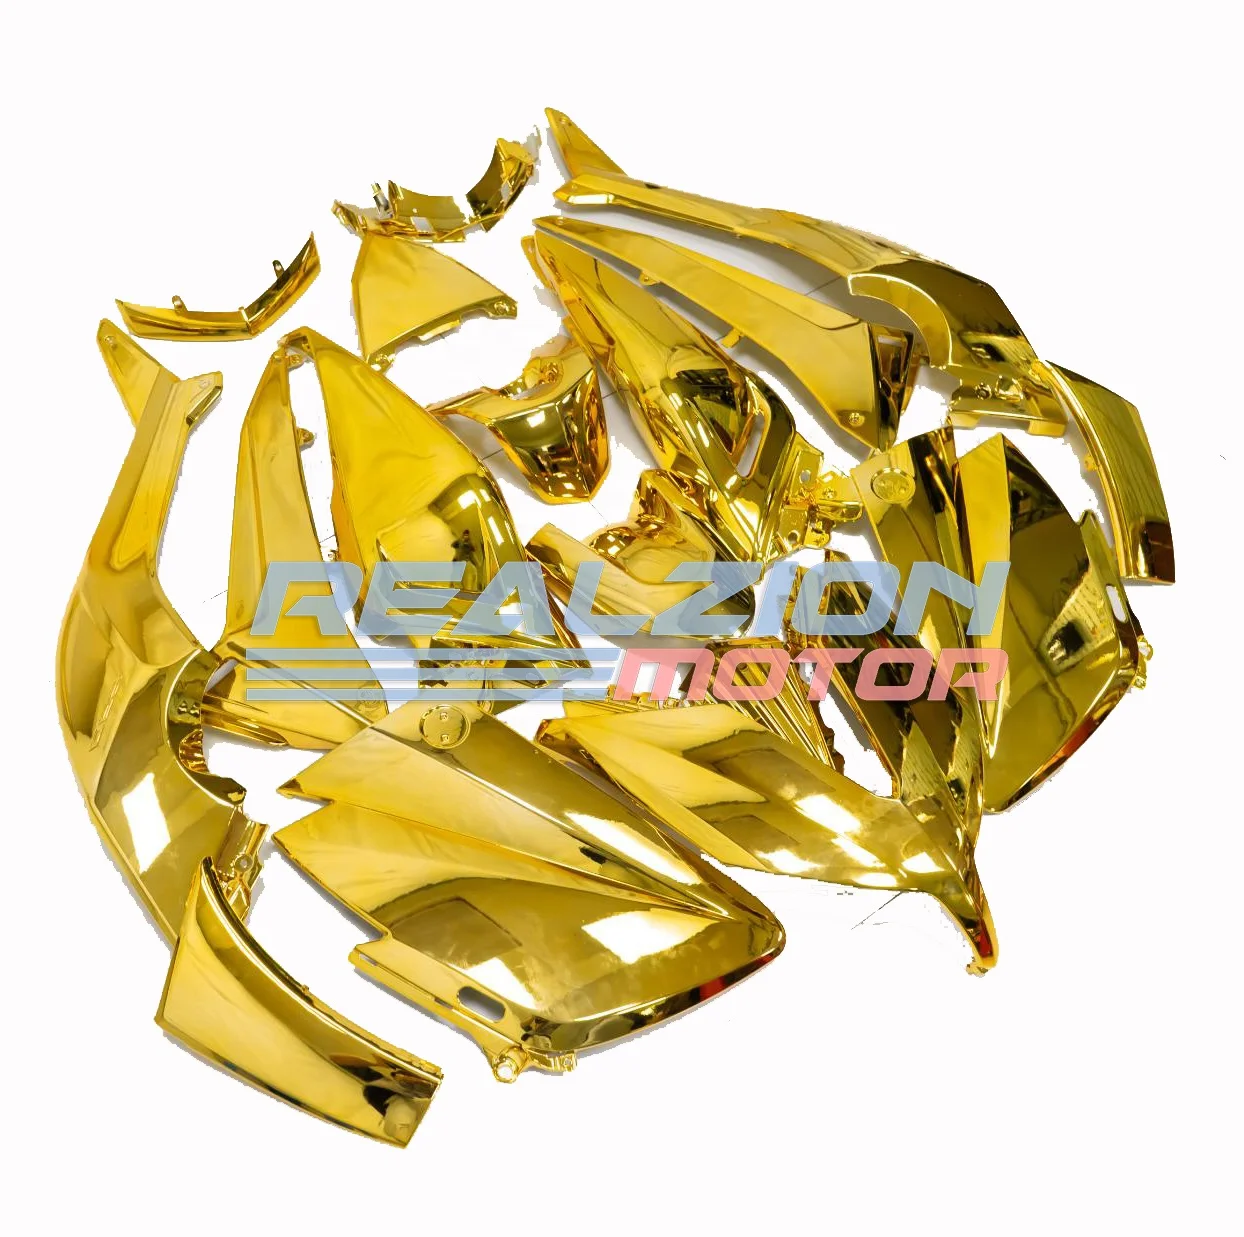 REALZION Motorcycle Golden Chrome Fairing Front Fiber Body Kit Deflector Rear Rectifier For Yamaha TMAX 530 2017 2018 2019 (1600112504469)